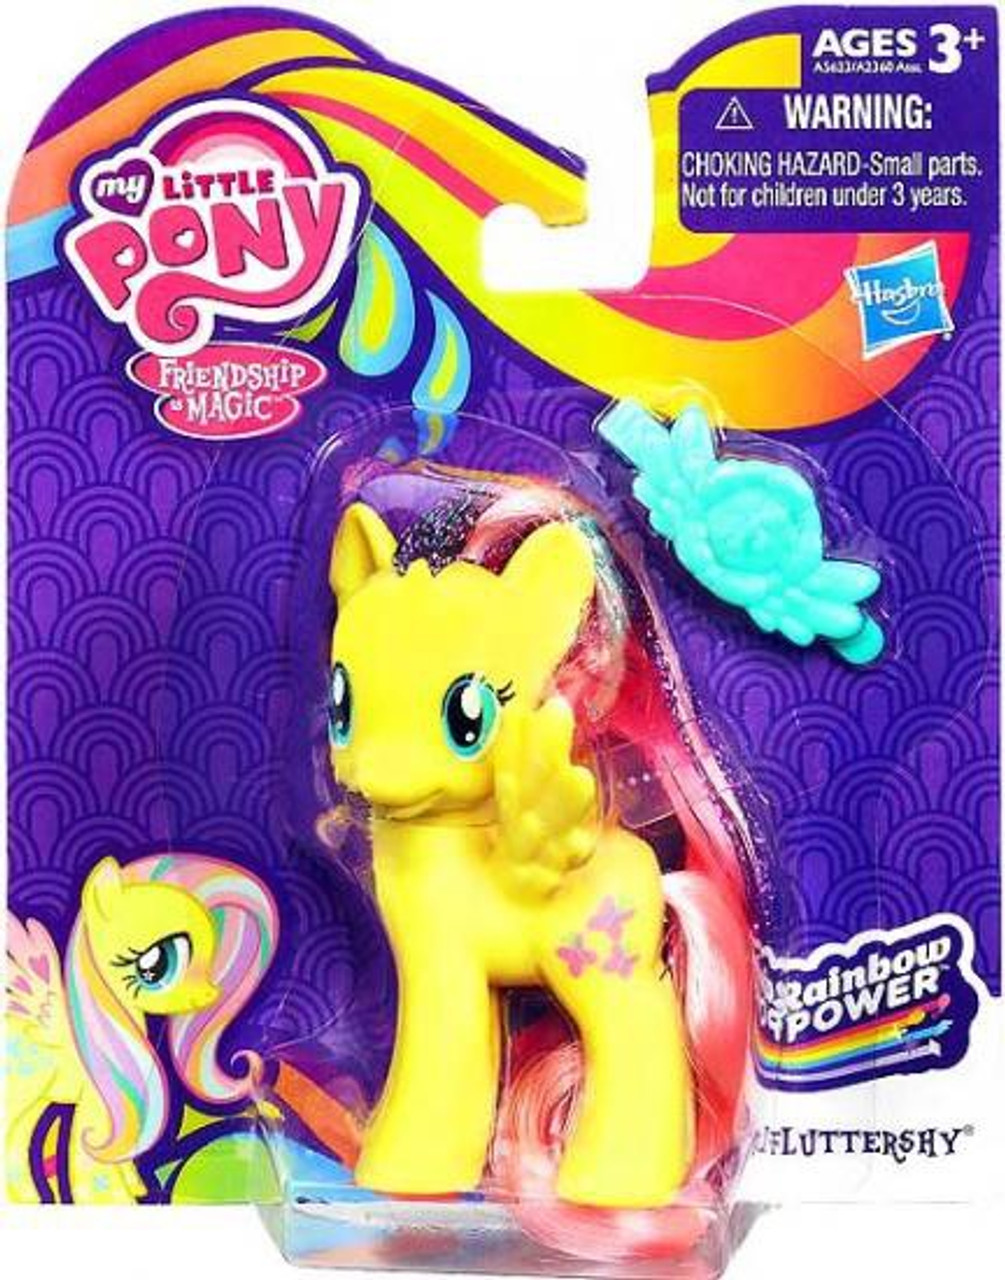 My Little Pony Friendship Is Magic Rainbow Power Fluttershy Figure Loose Hasbro Toys Toywiz - my little pony friendship is magic roleplay roblox